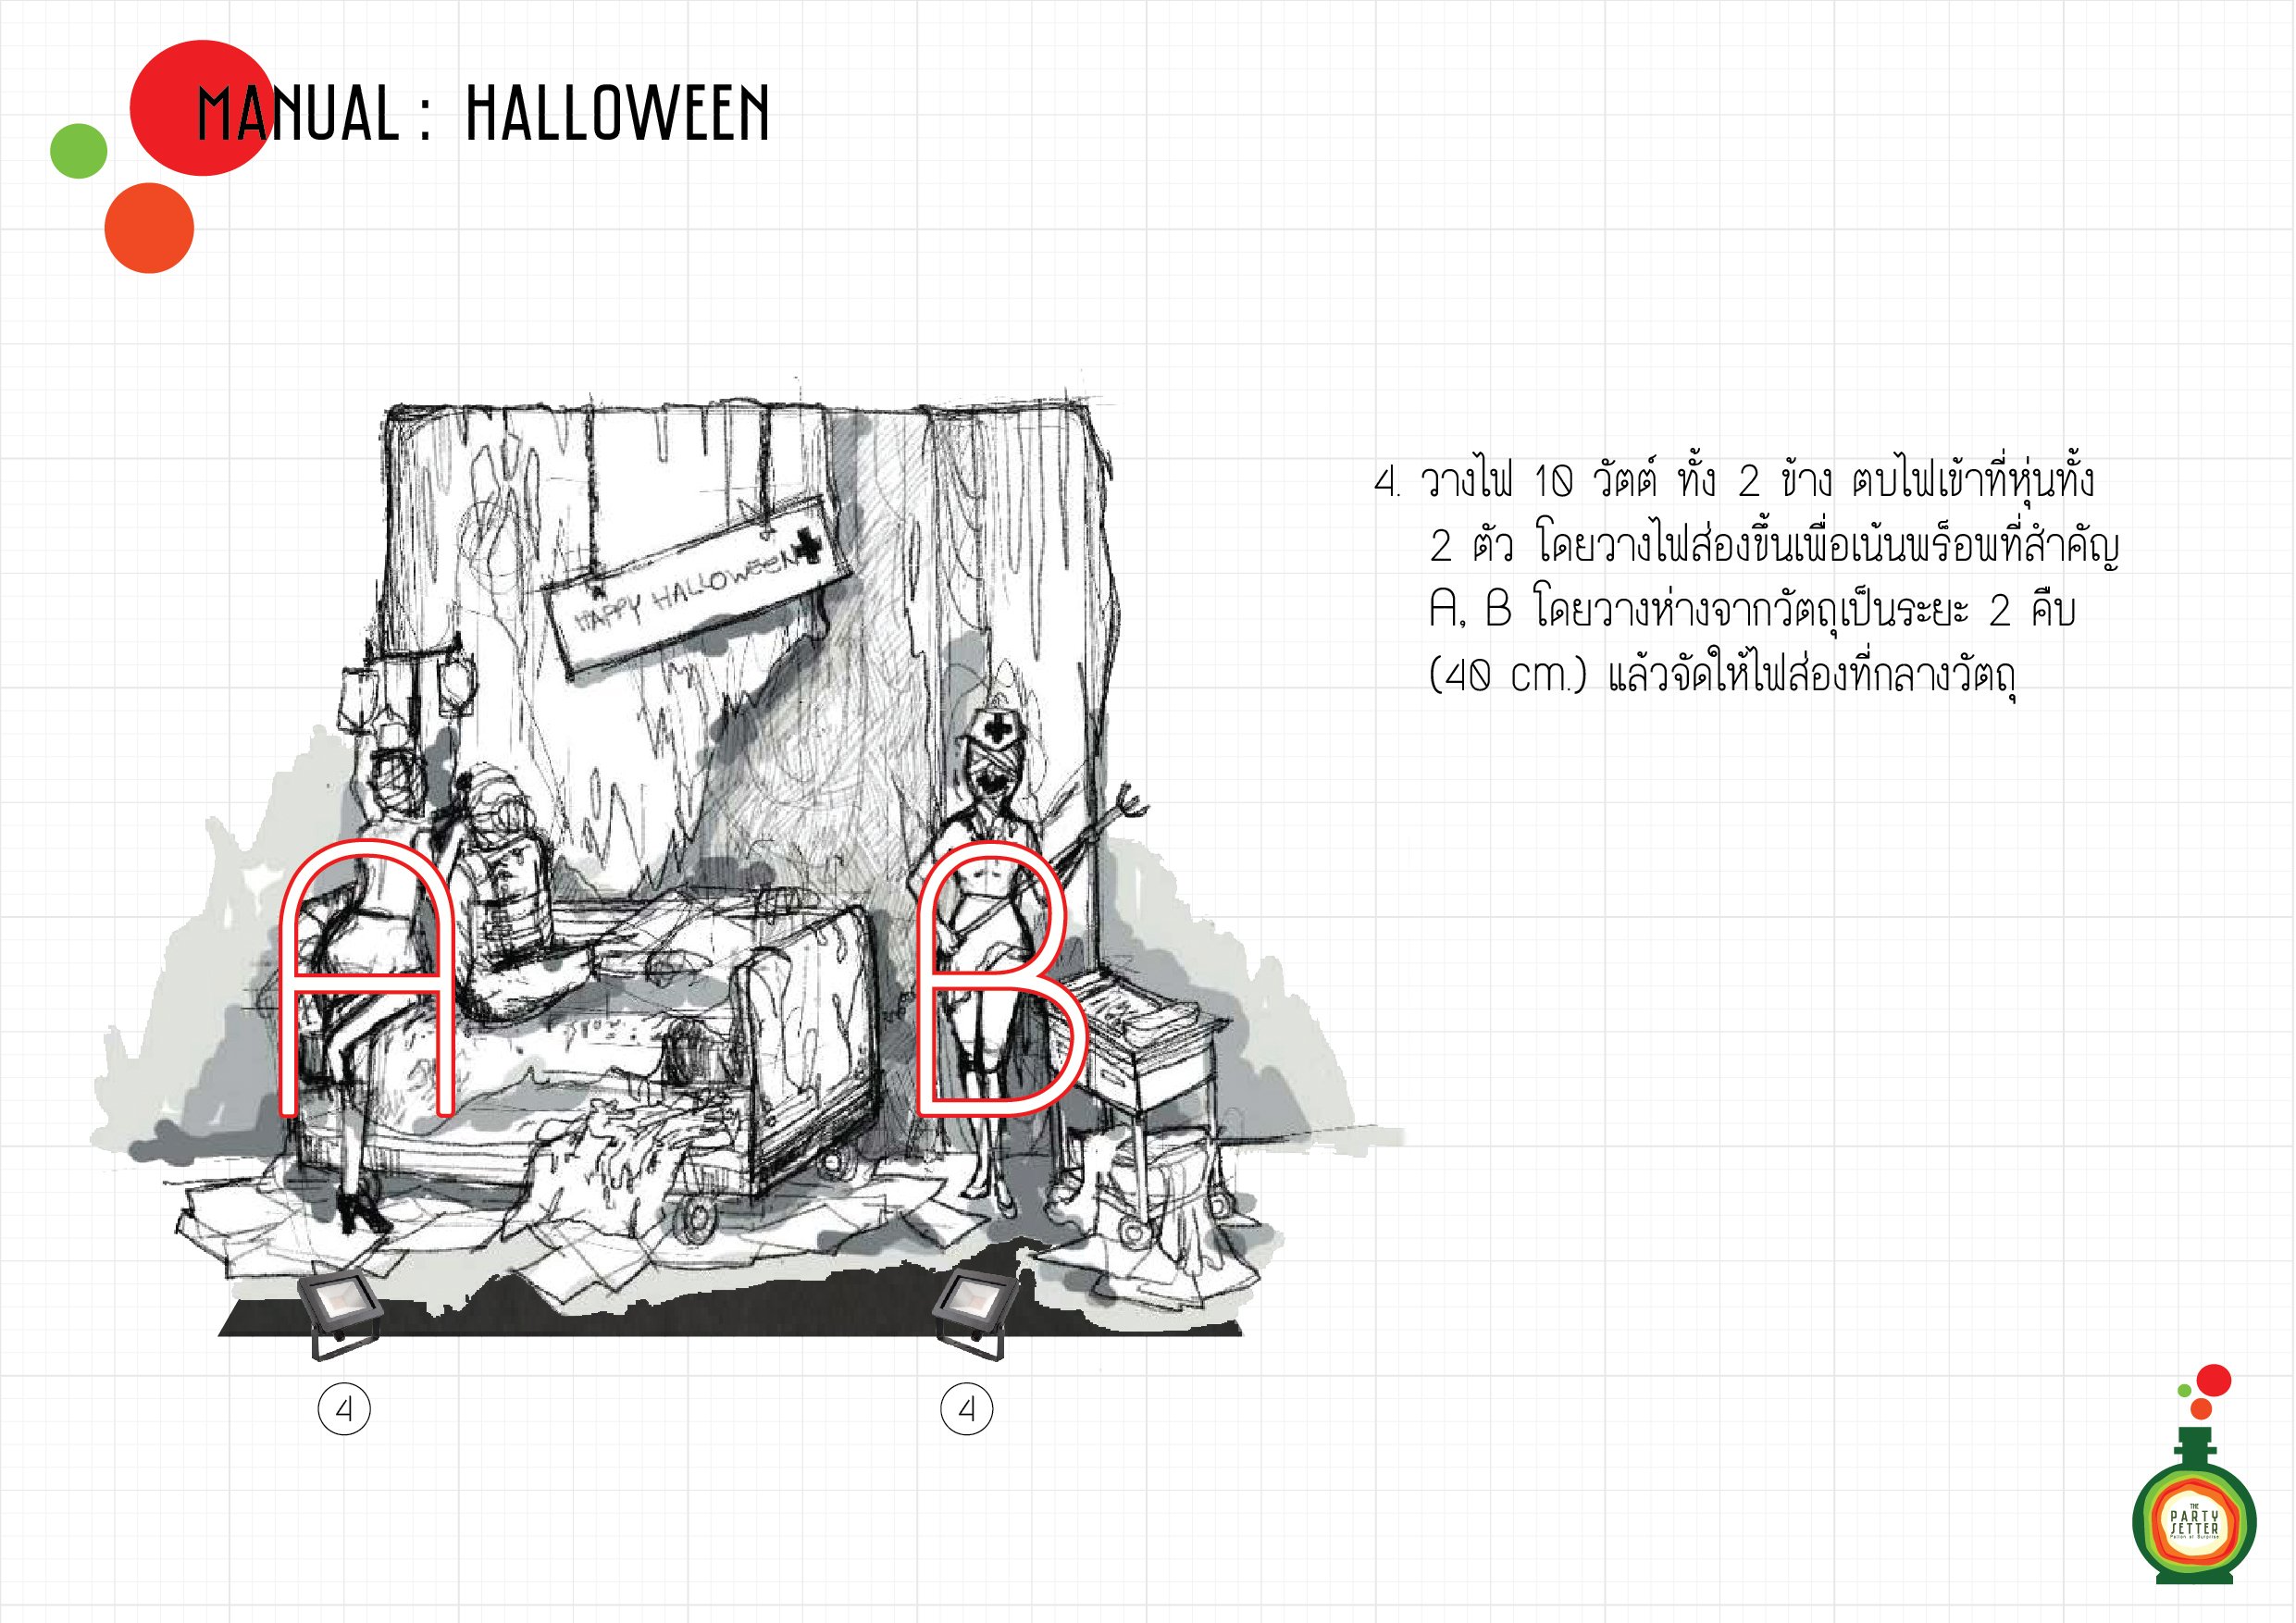 Manual_Halloween_14-04-01.jpg